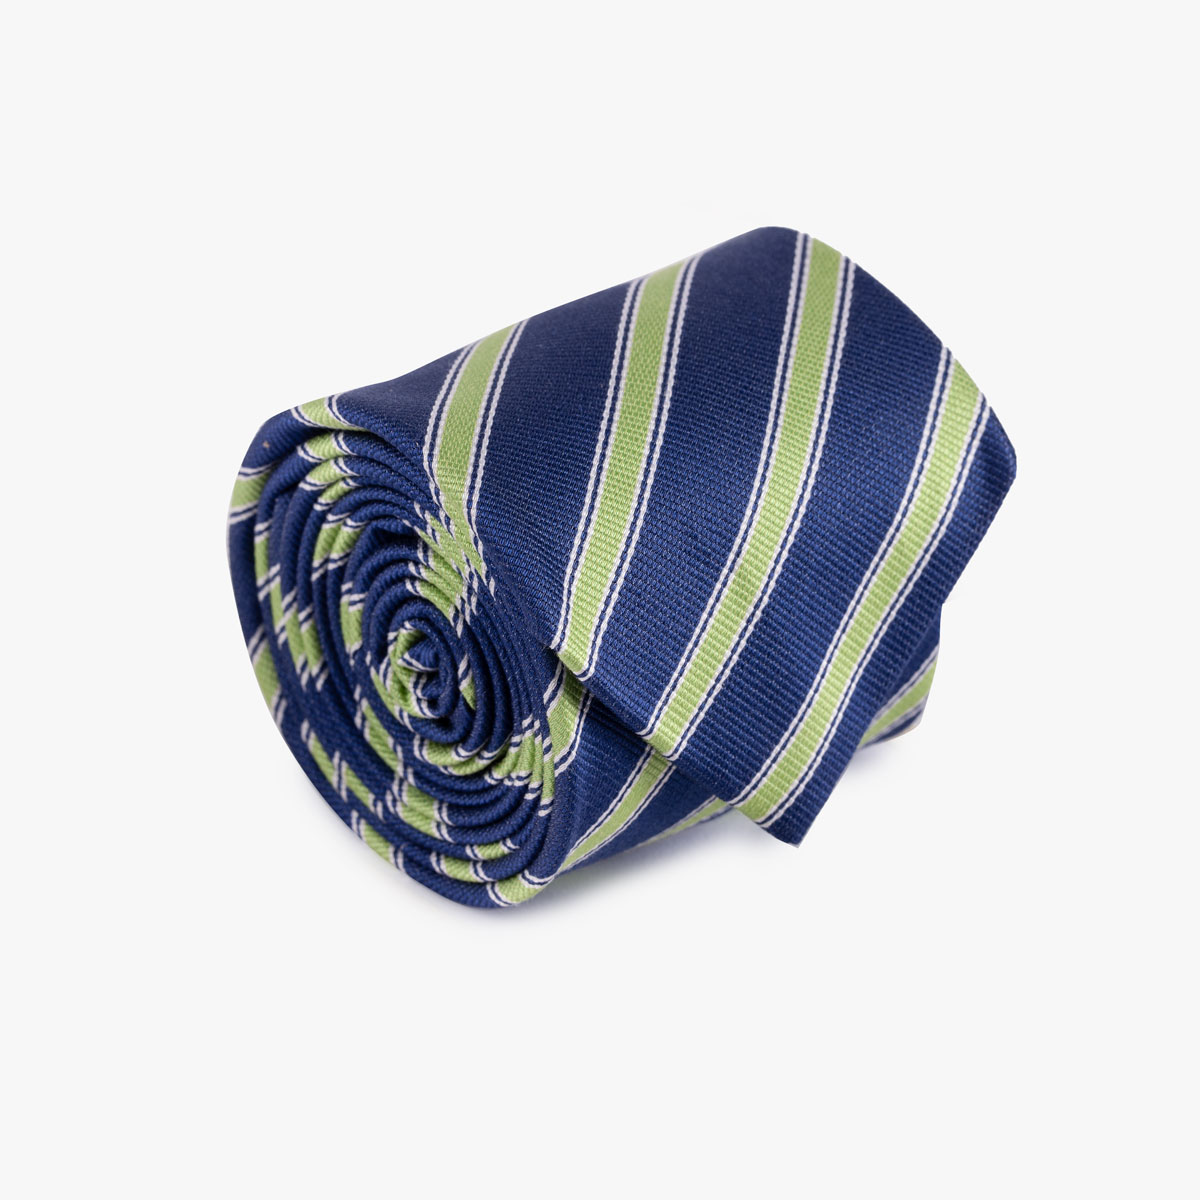 Krawatte aus Seide/Baumwolle in dunkelblau gestreift